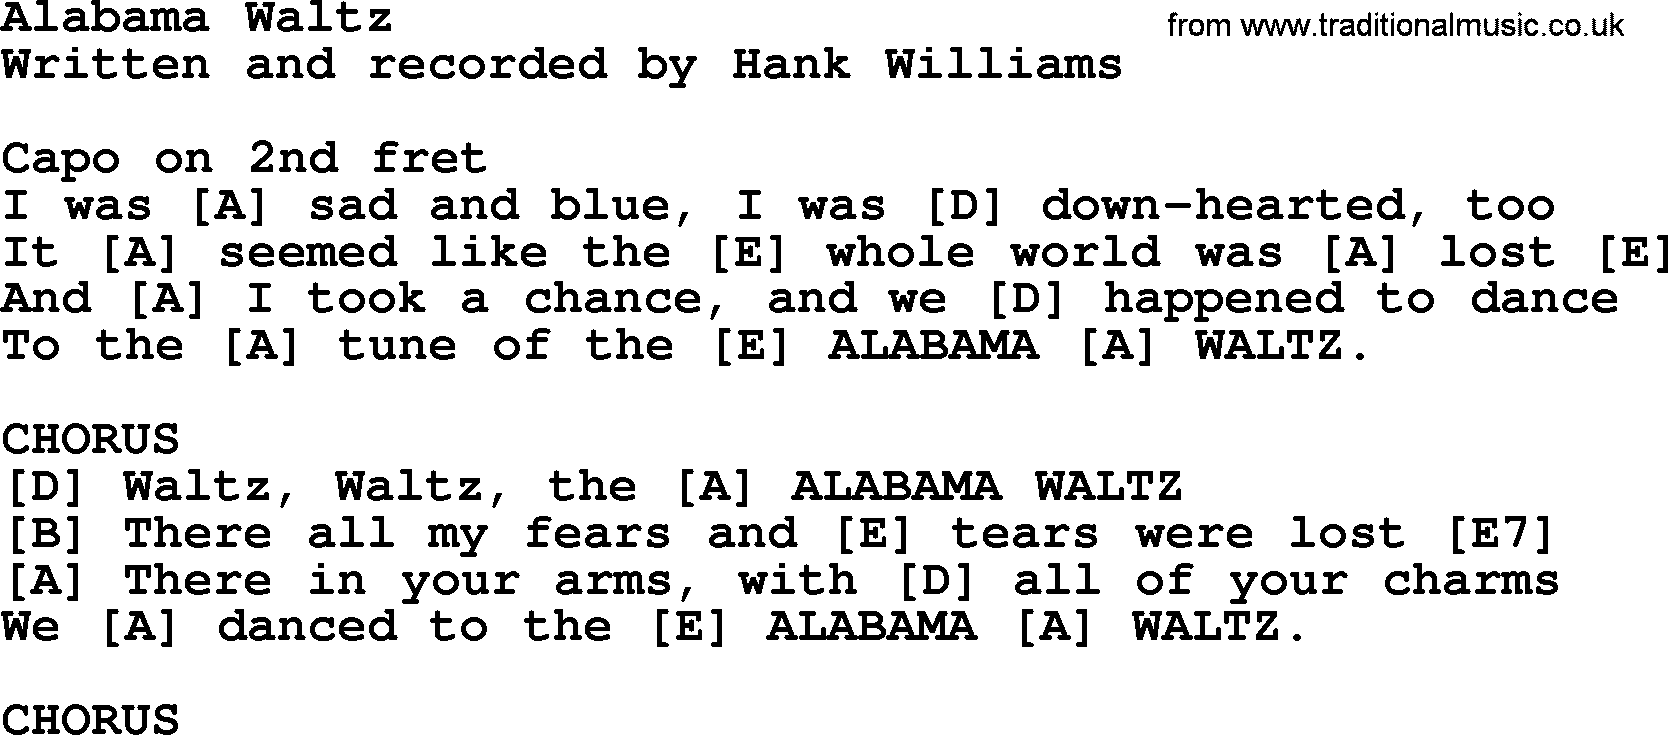 Hank Williams song Alabama Waltz, lyrics and chords